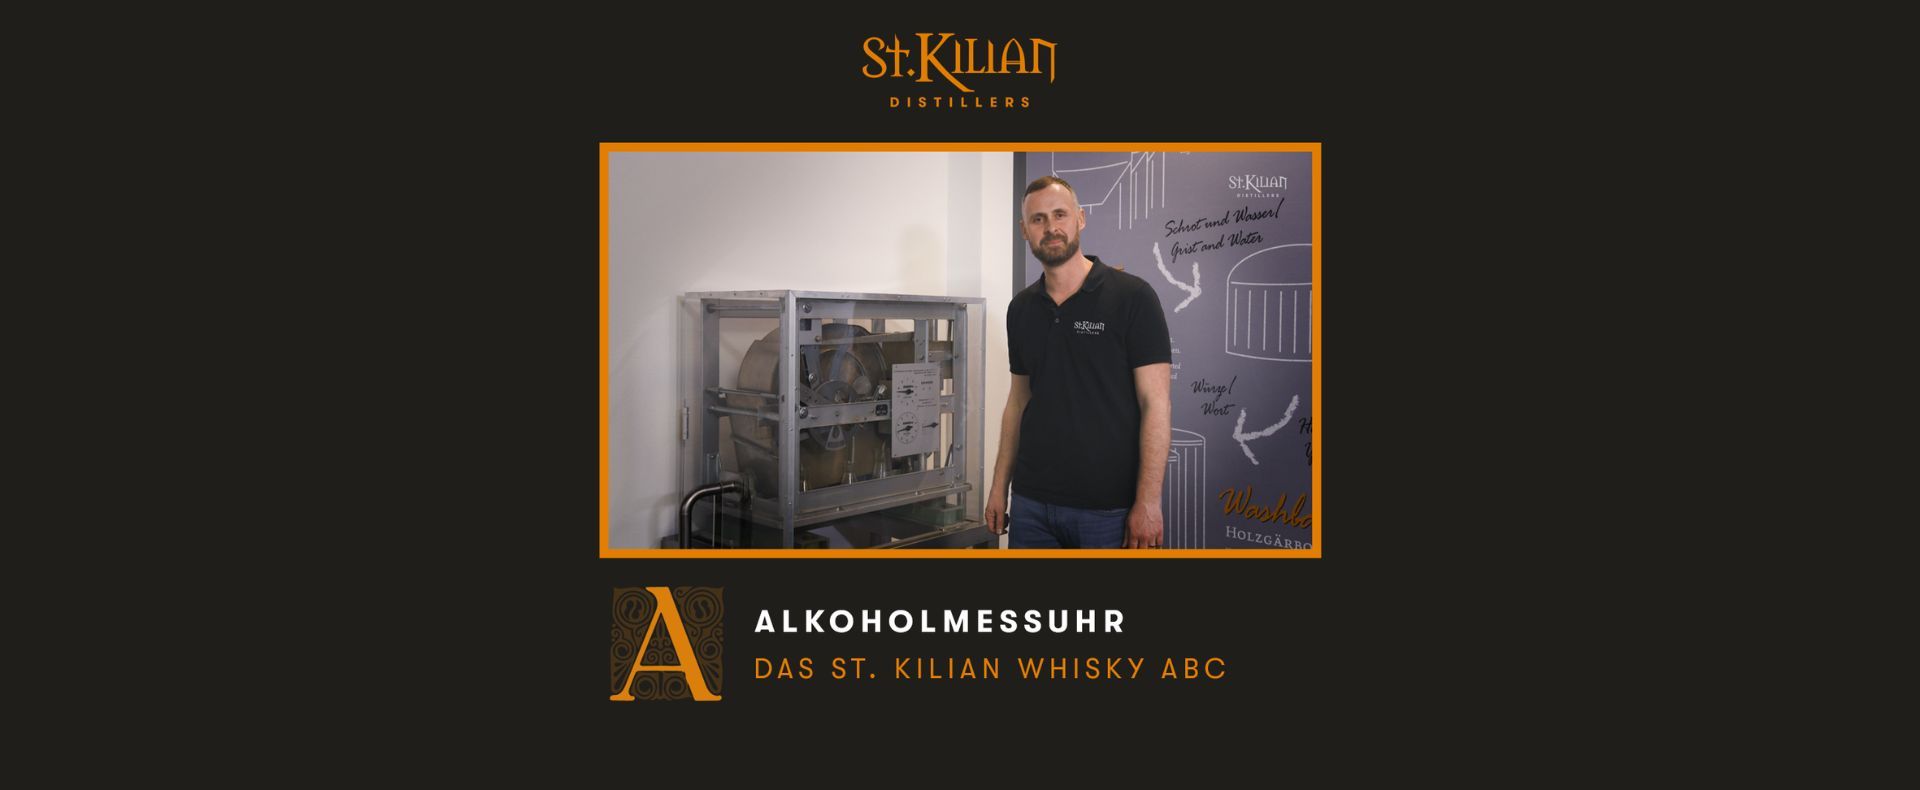 Whisky ABC - A wie Alkoholmessuhr